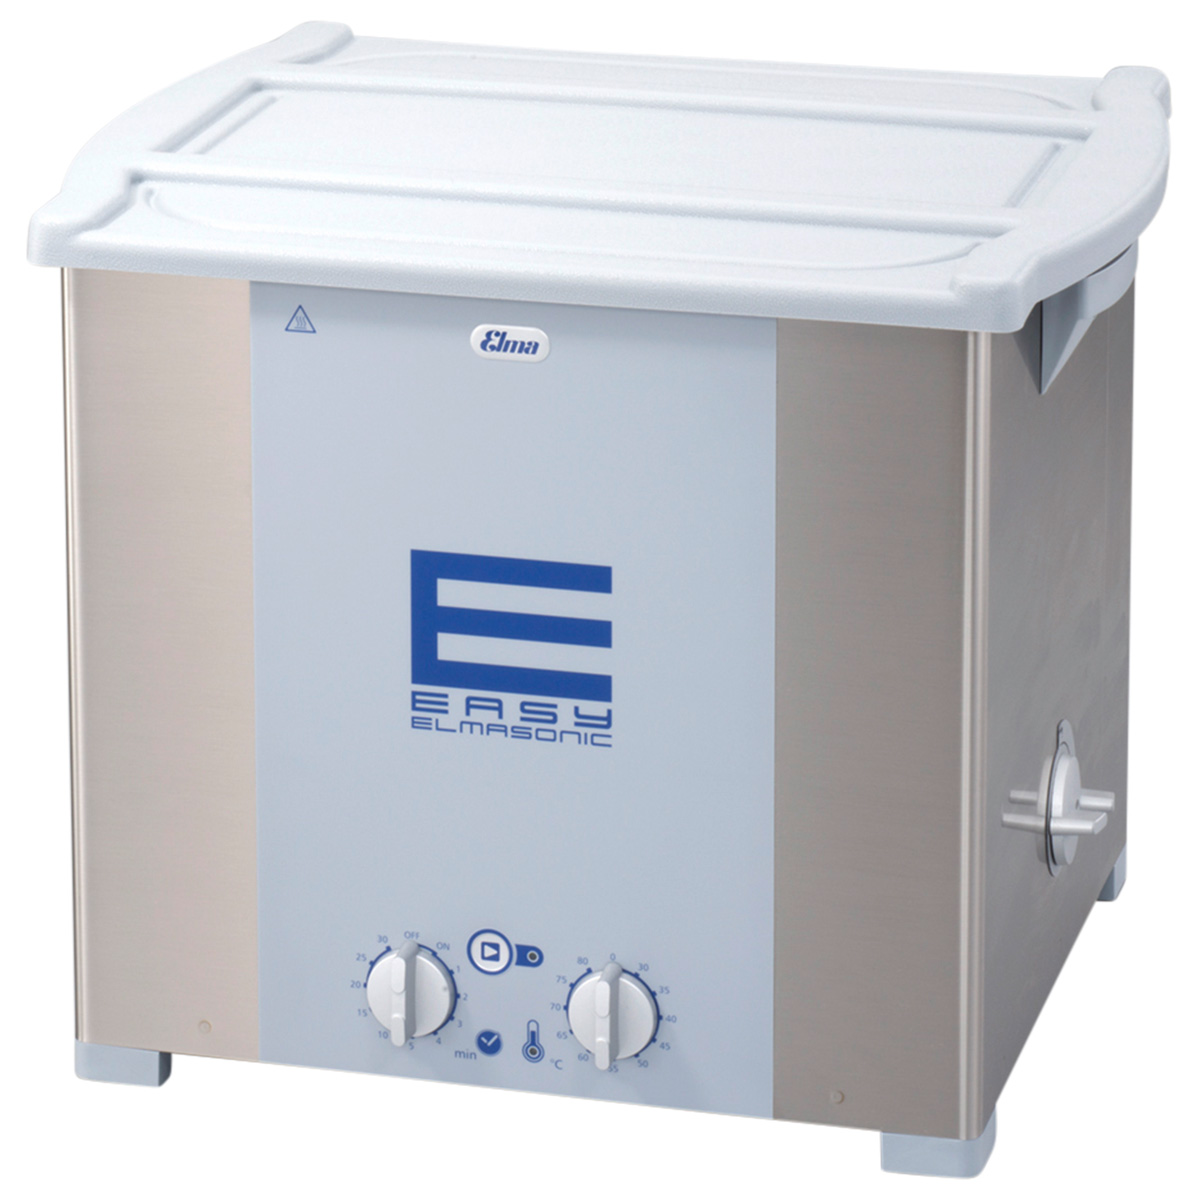 Elmasonic Easy 120H appareil a nettoyer ultrasons, avec chauffage et robinet de vidange, 100 - 120 V